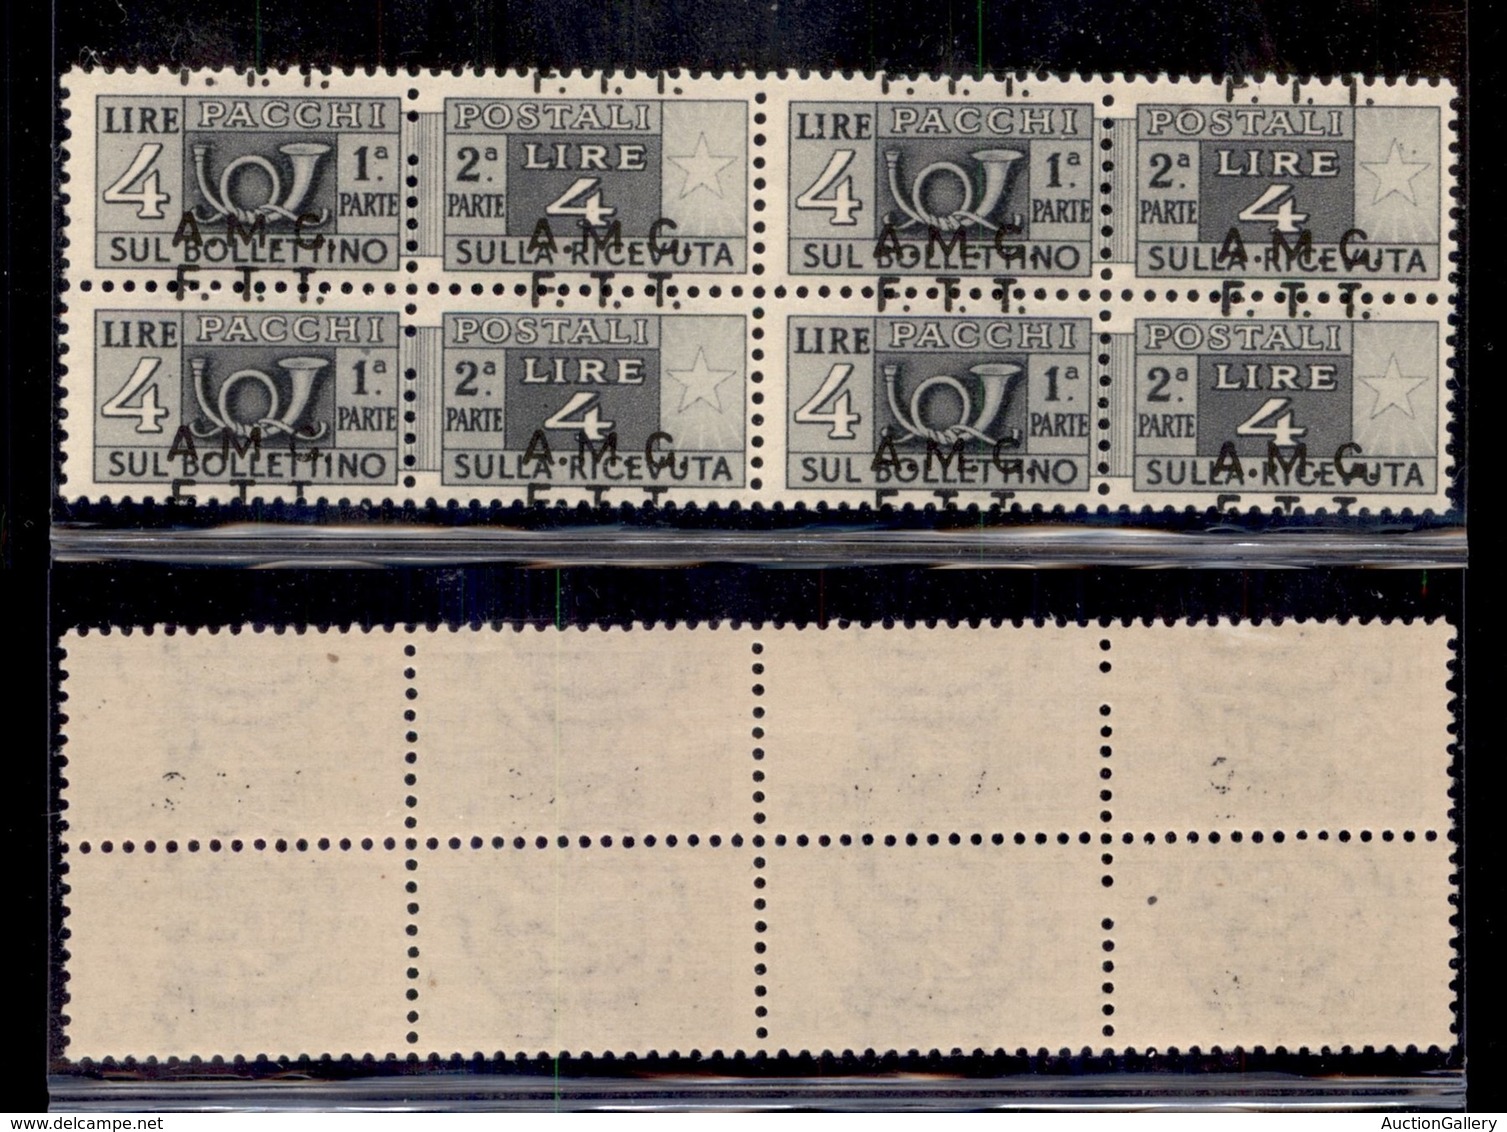 TRIESTE - AMG-FTT - 1947 - 4 Lire Pacchi Postali (4 G) - Quartina Con Soprastampa Spostata In Senso Verticale - Gomma In - Neufs